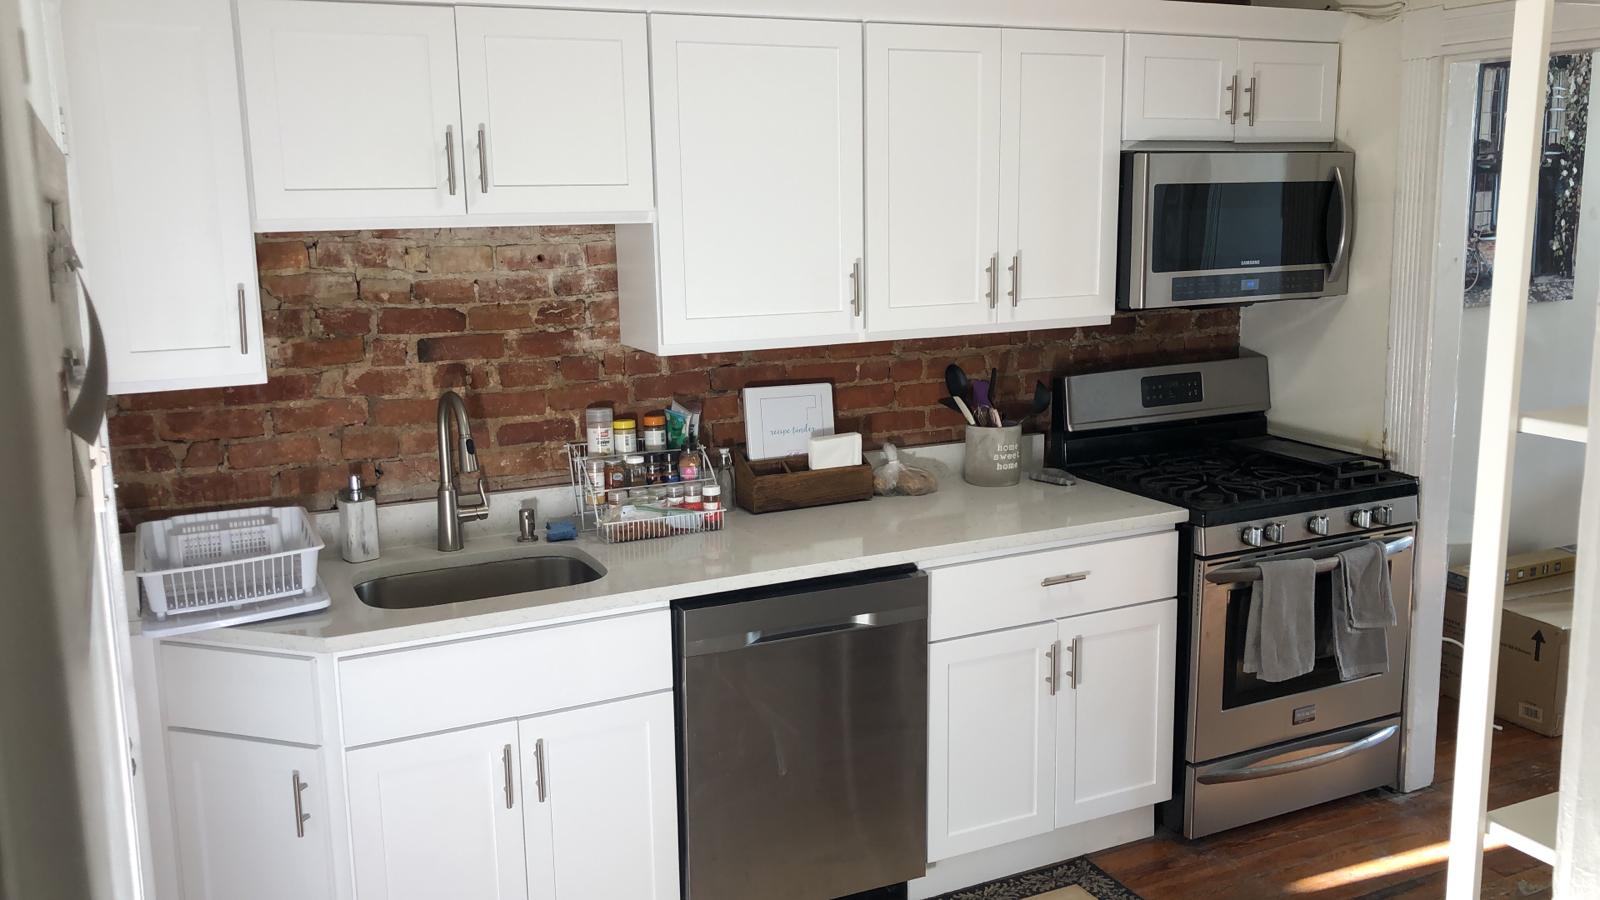 Photos of apartment on Union Park St.,Boston MA 02118